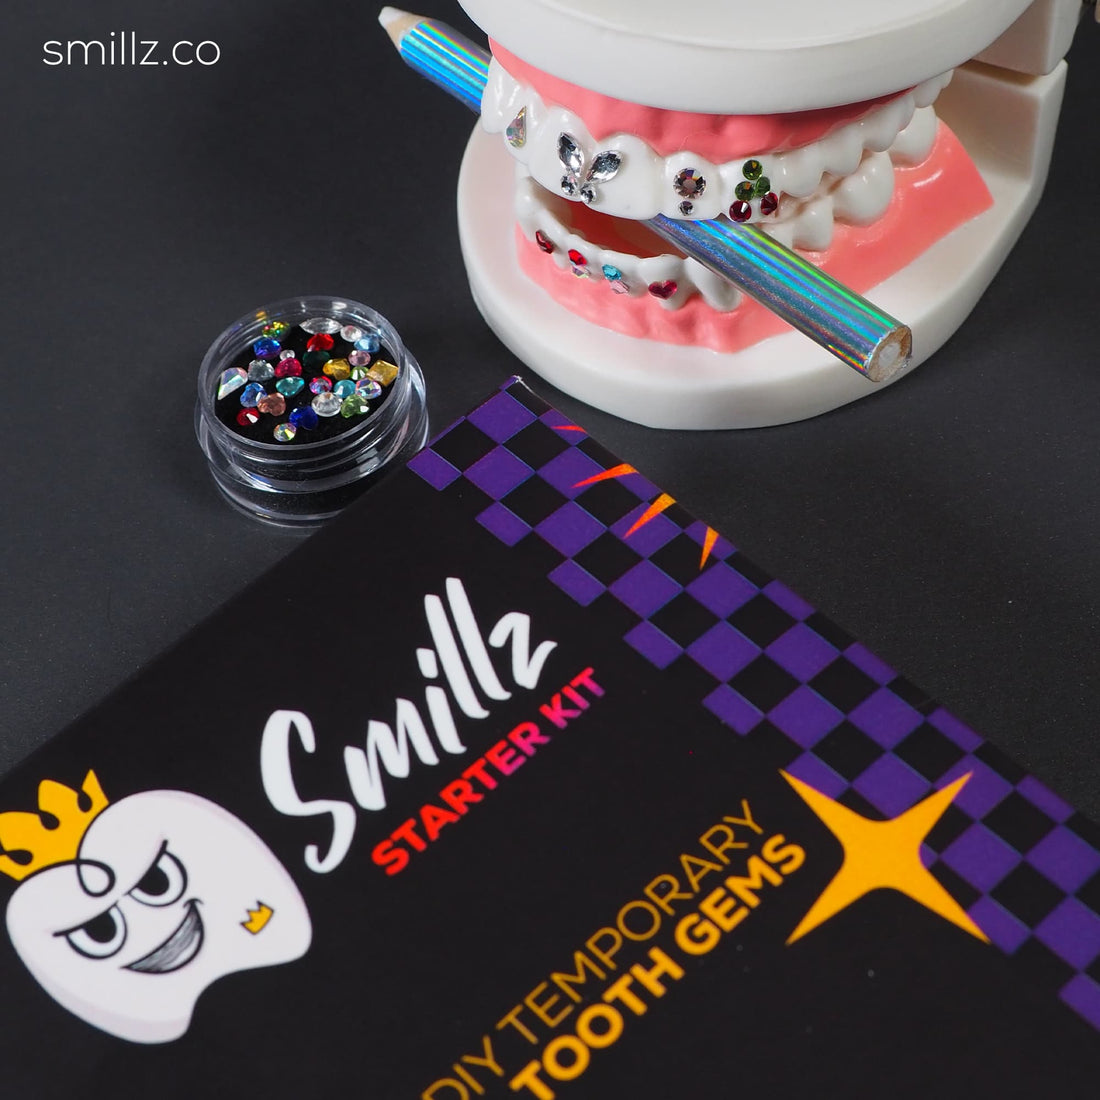 Smillz Tooth Gem Starter Kit